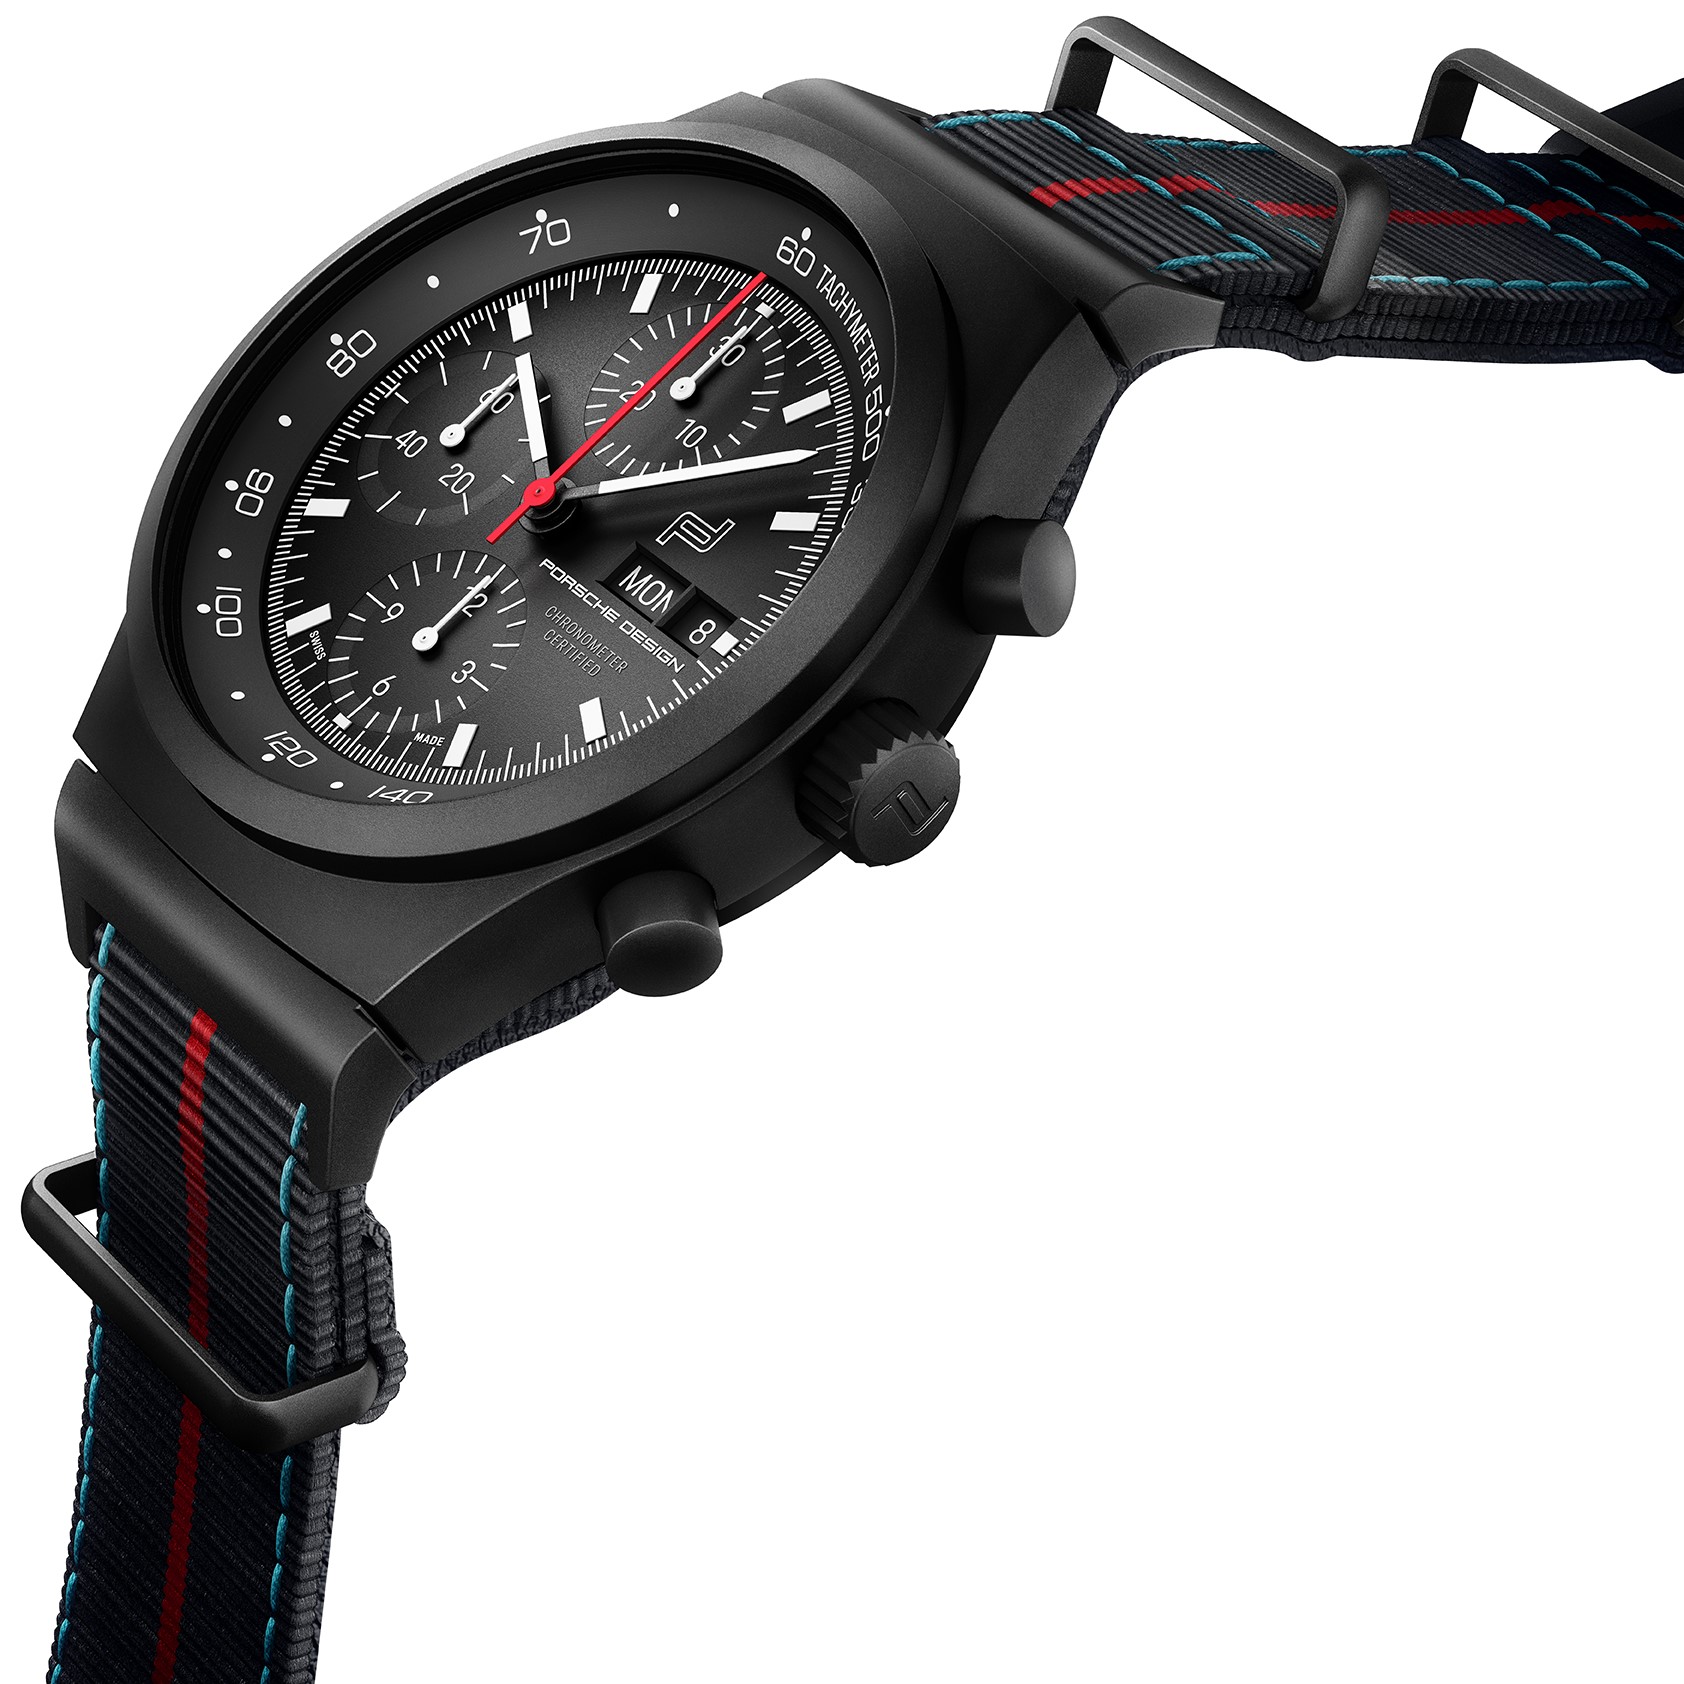 Porsche Design presents a limited edition timepiece, the Chronograph 1, commemorating Porsche's legendary sports car DNA.